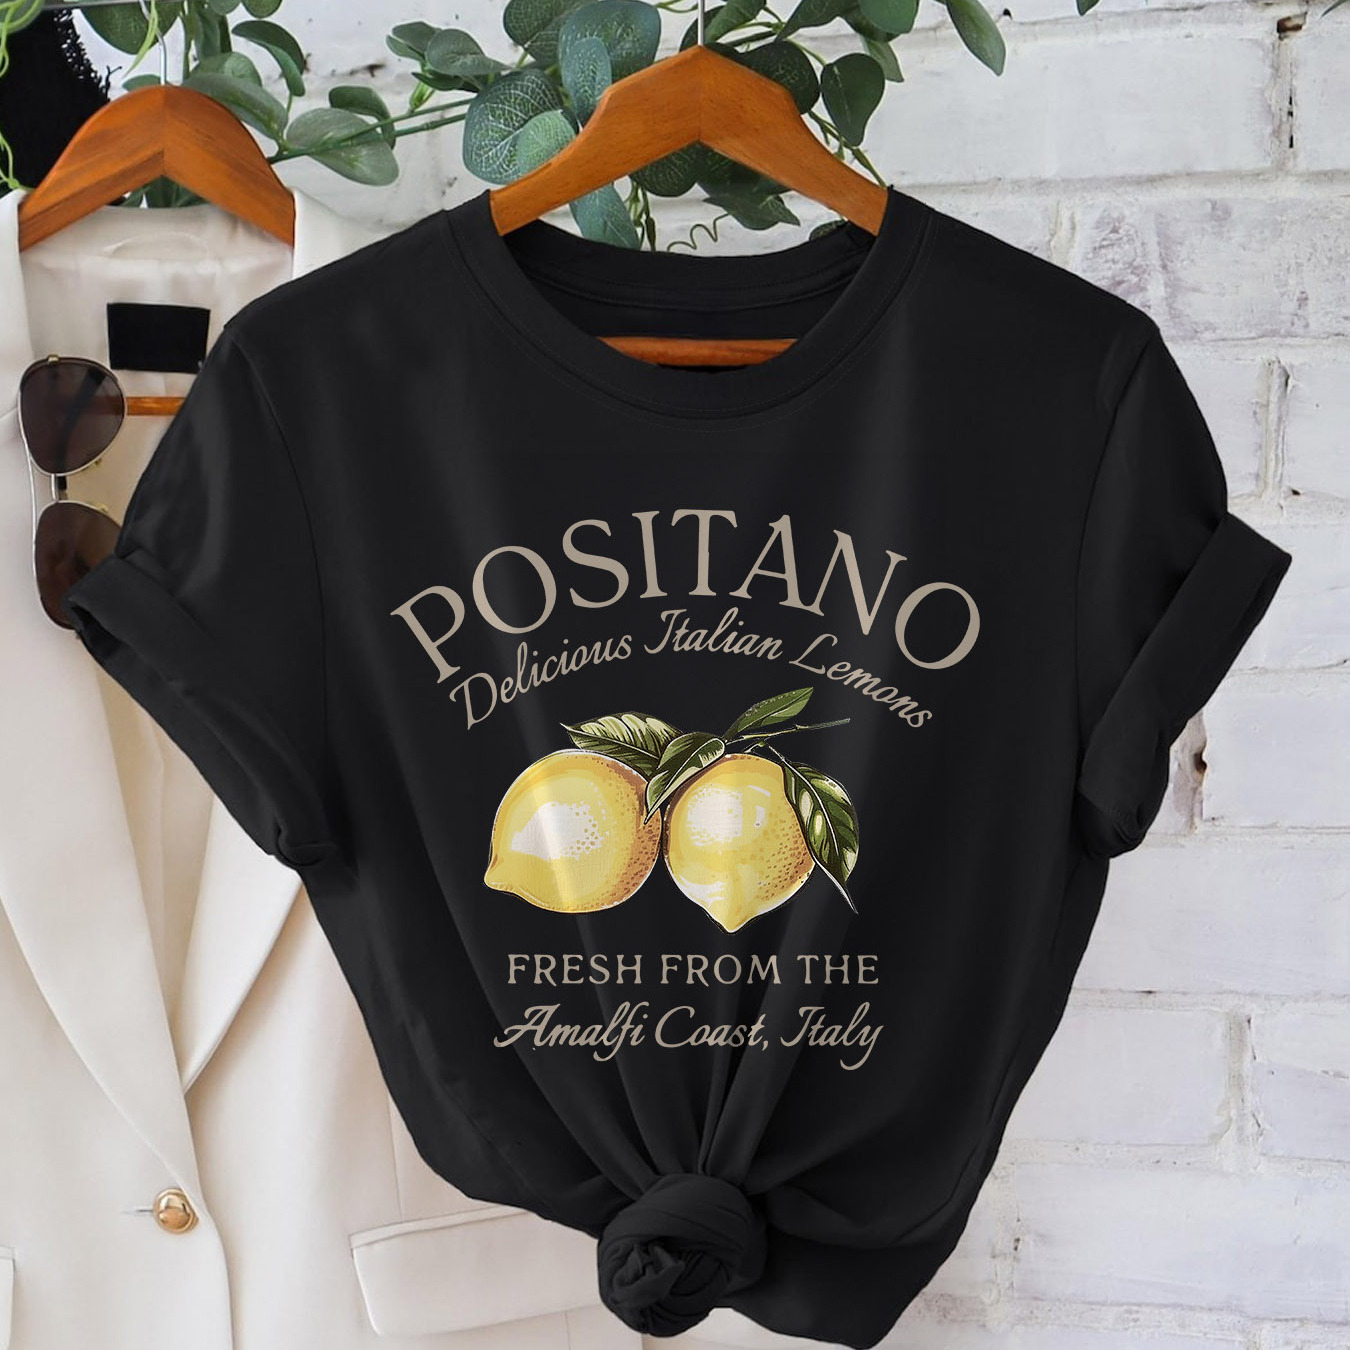 

Positano & Lemon Print T-shirt, Short Sleeve Crew Neck Casual Top For Summer & Spring, Women's Clothing